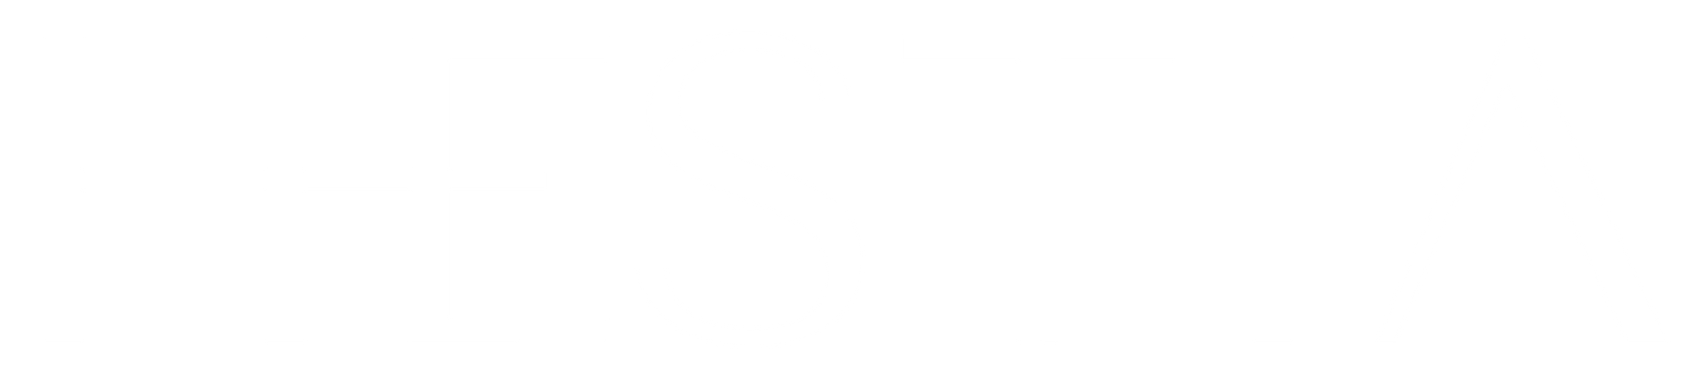 HESTIA white png logo